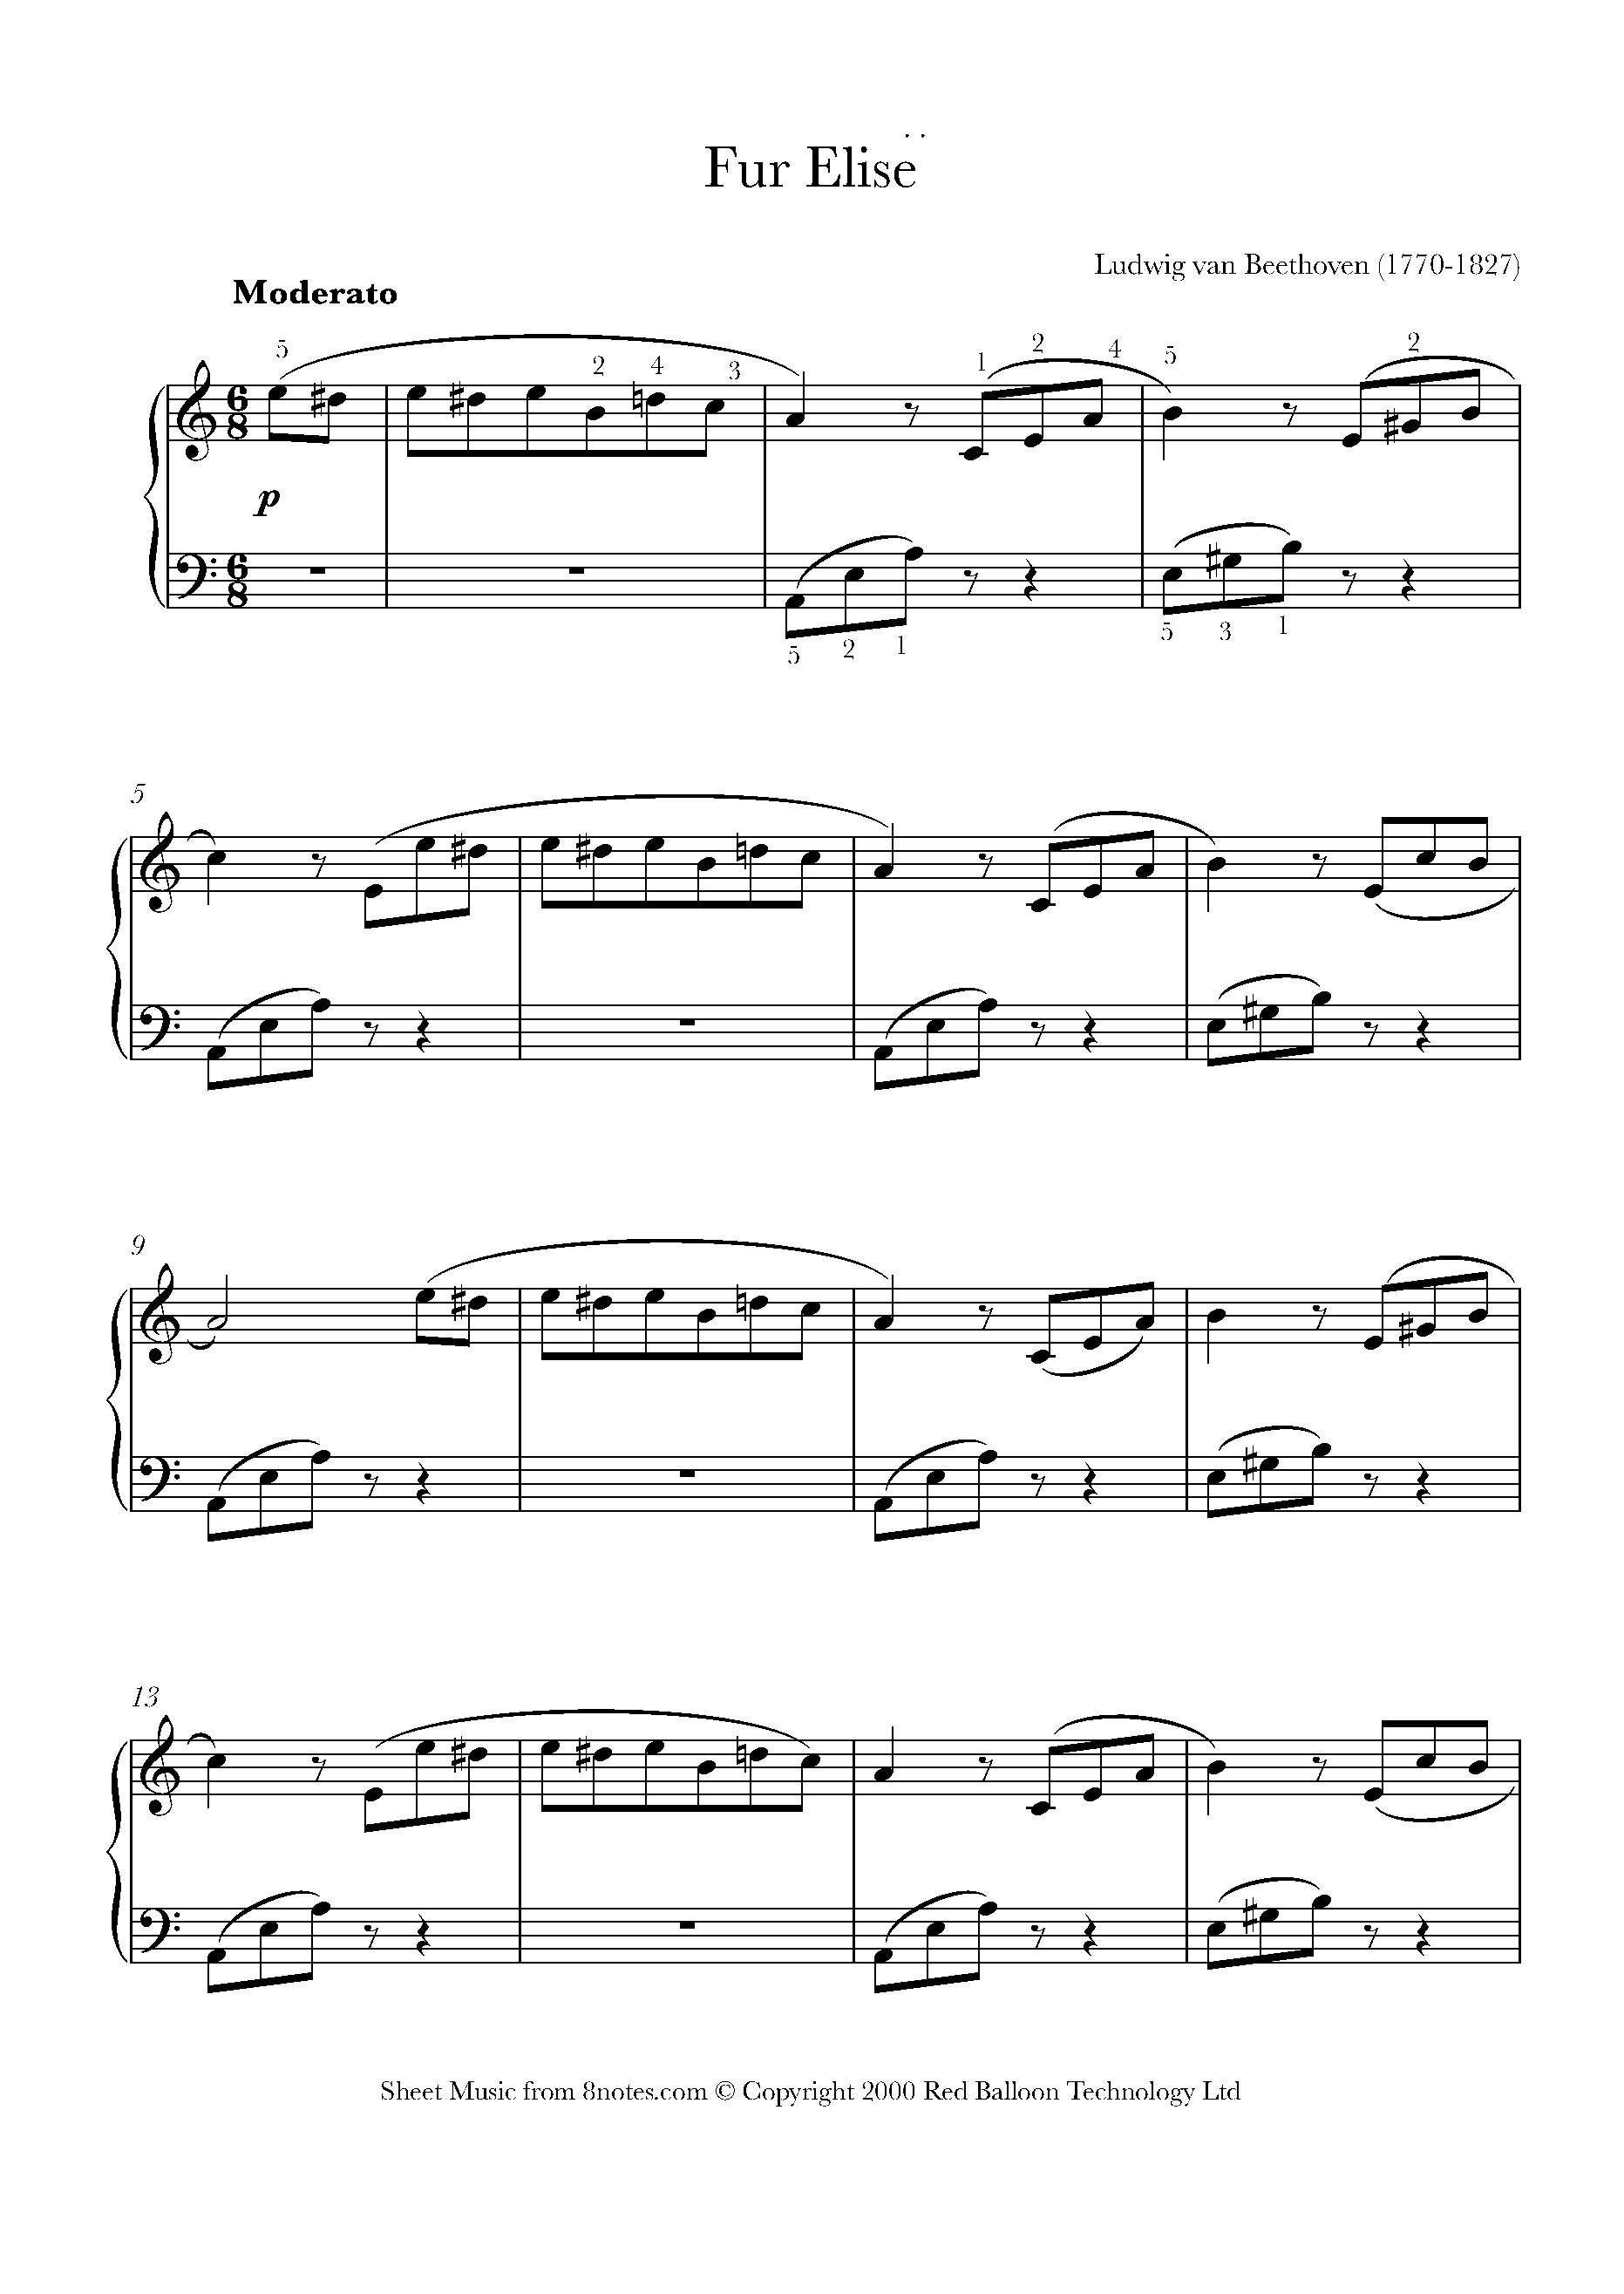 d-sagr-ablement-marasme-ruckus-fur-elise-easy-piano-sheet-music-free